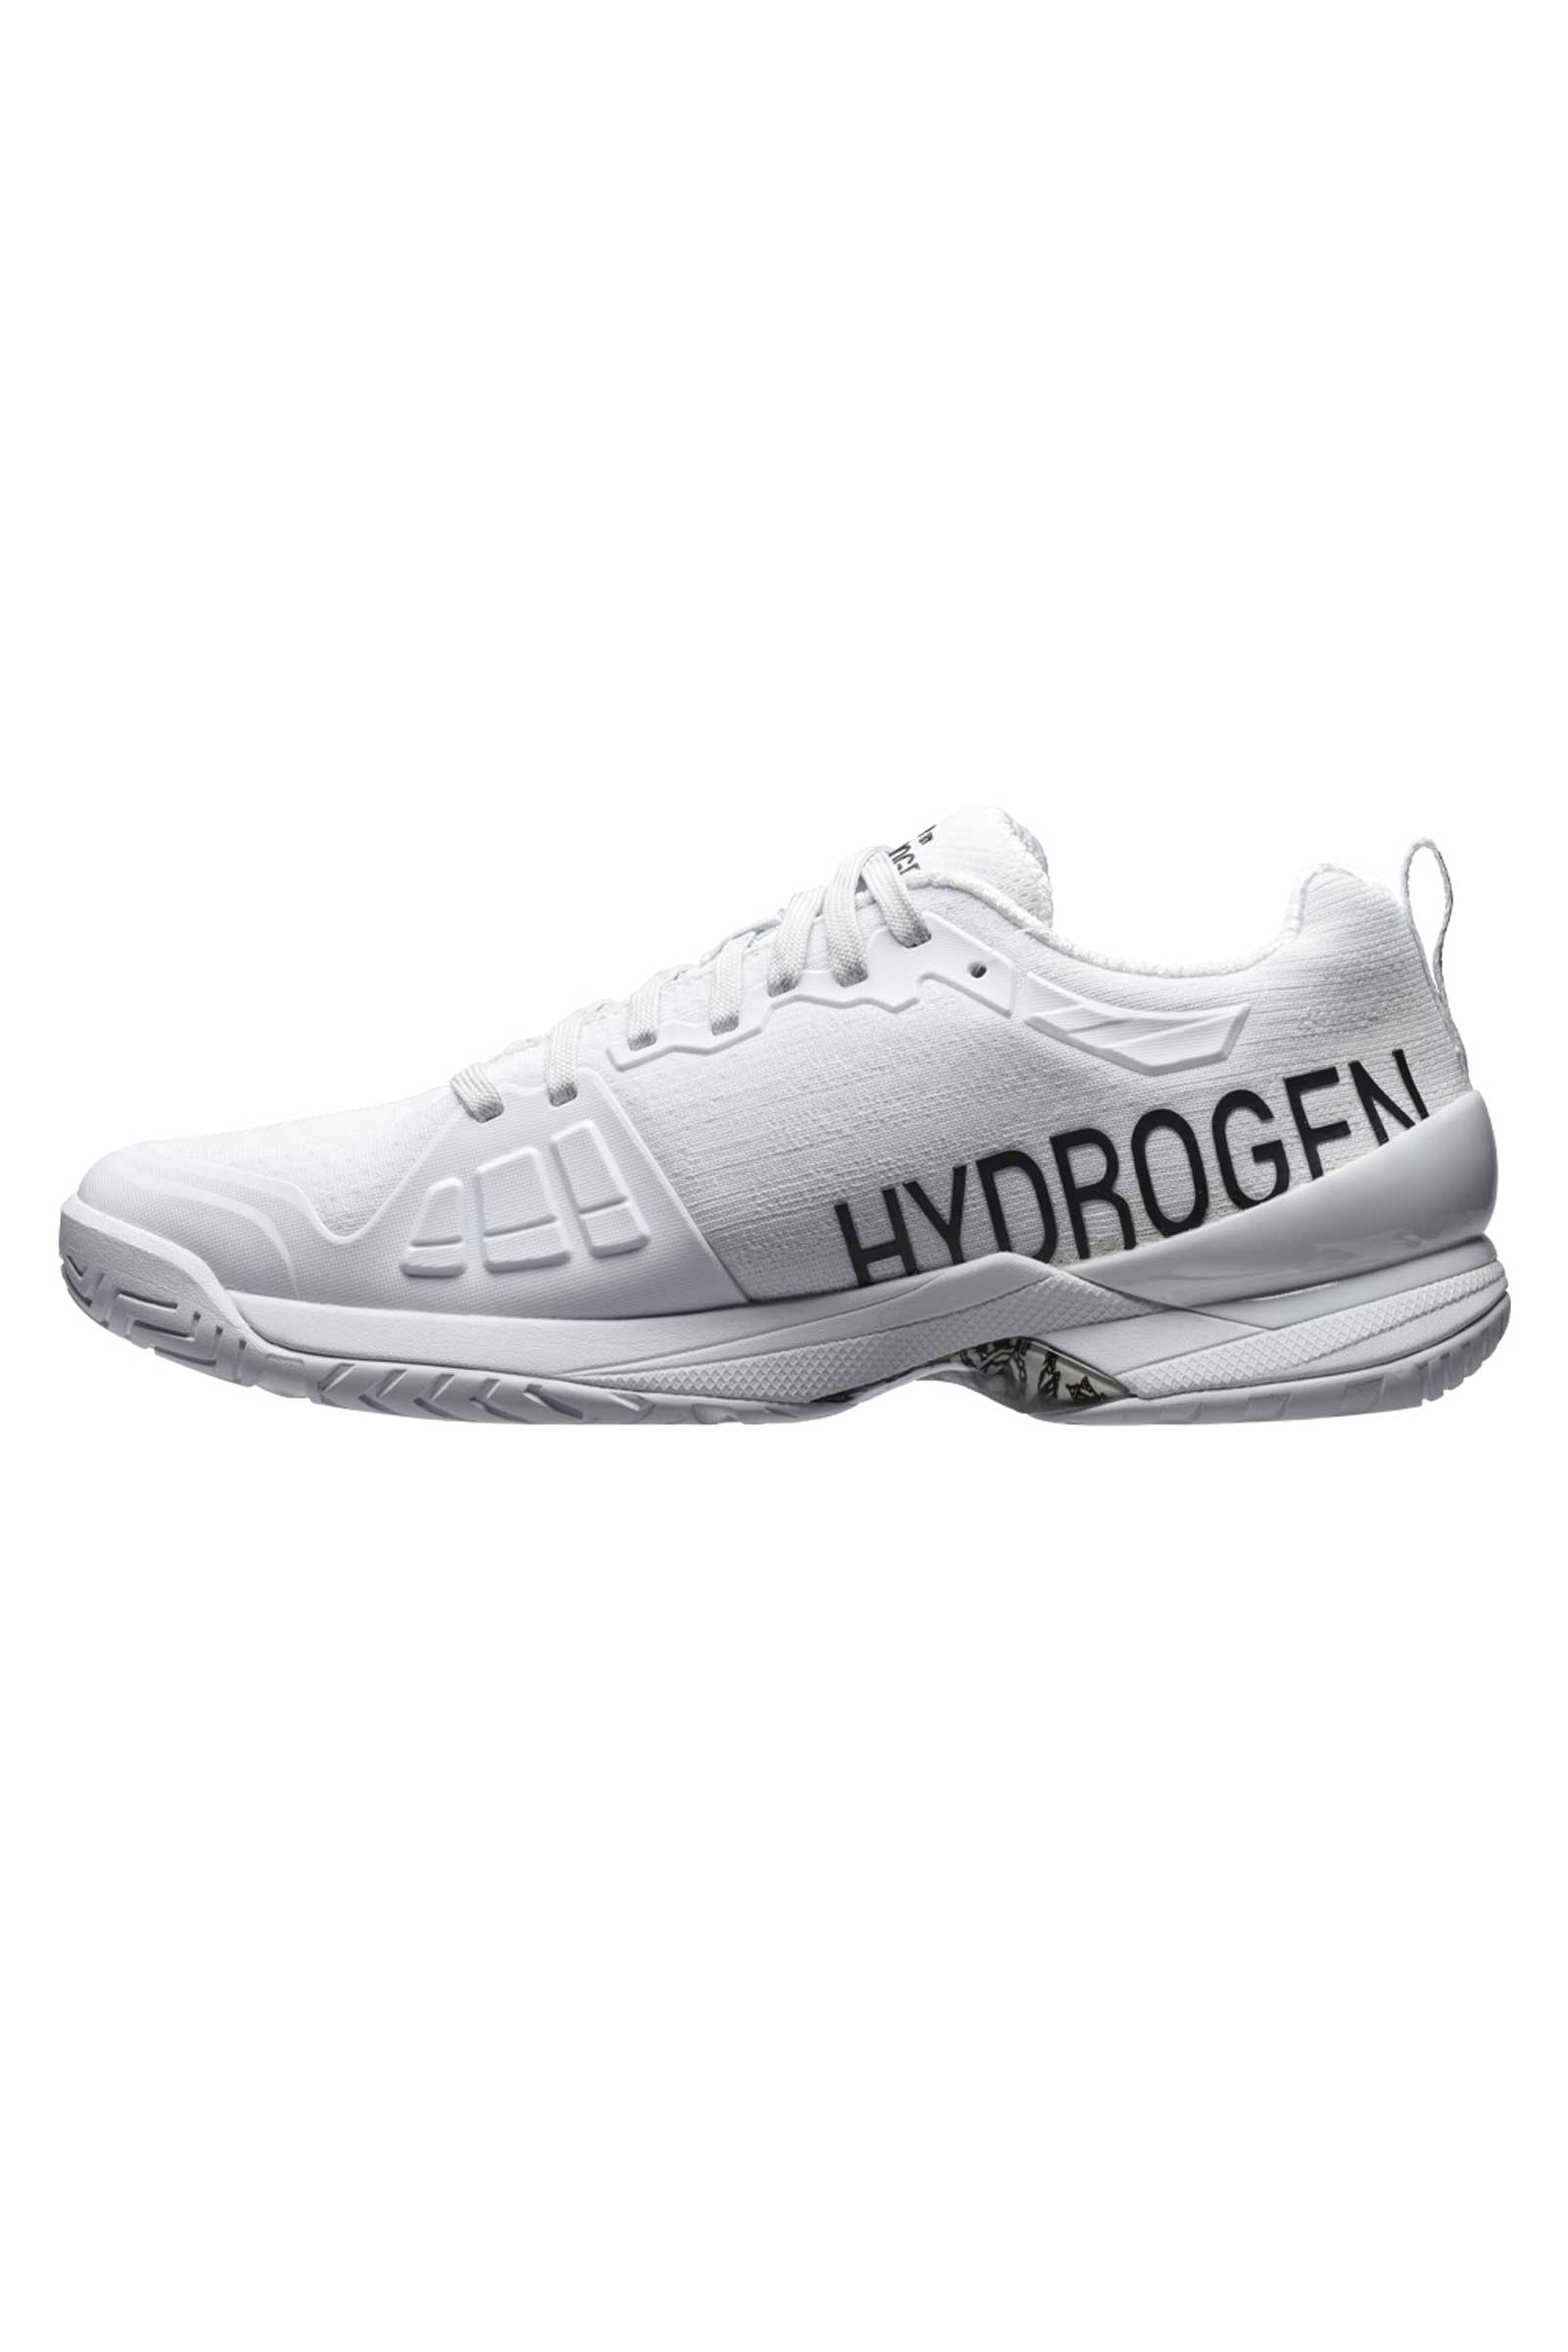 TENNIS SHOES PRINCE BY HYDROGEN - WHITE - Abbigliamento sportivo | Hydrogen